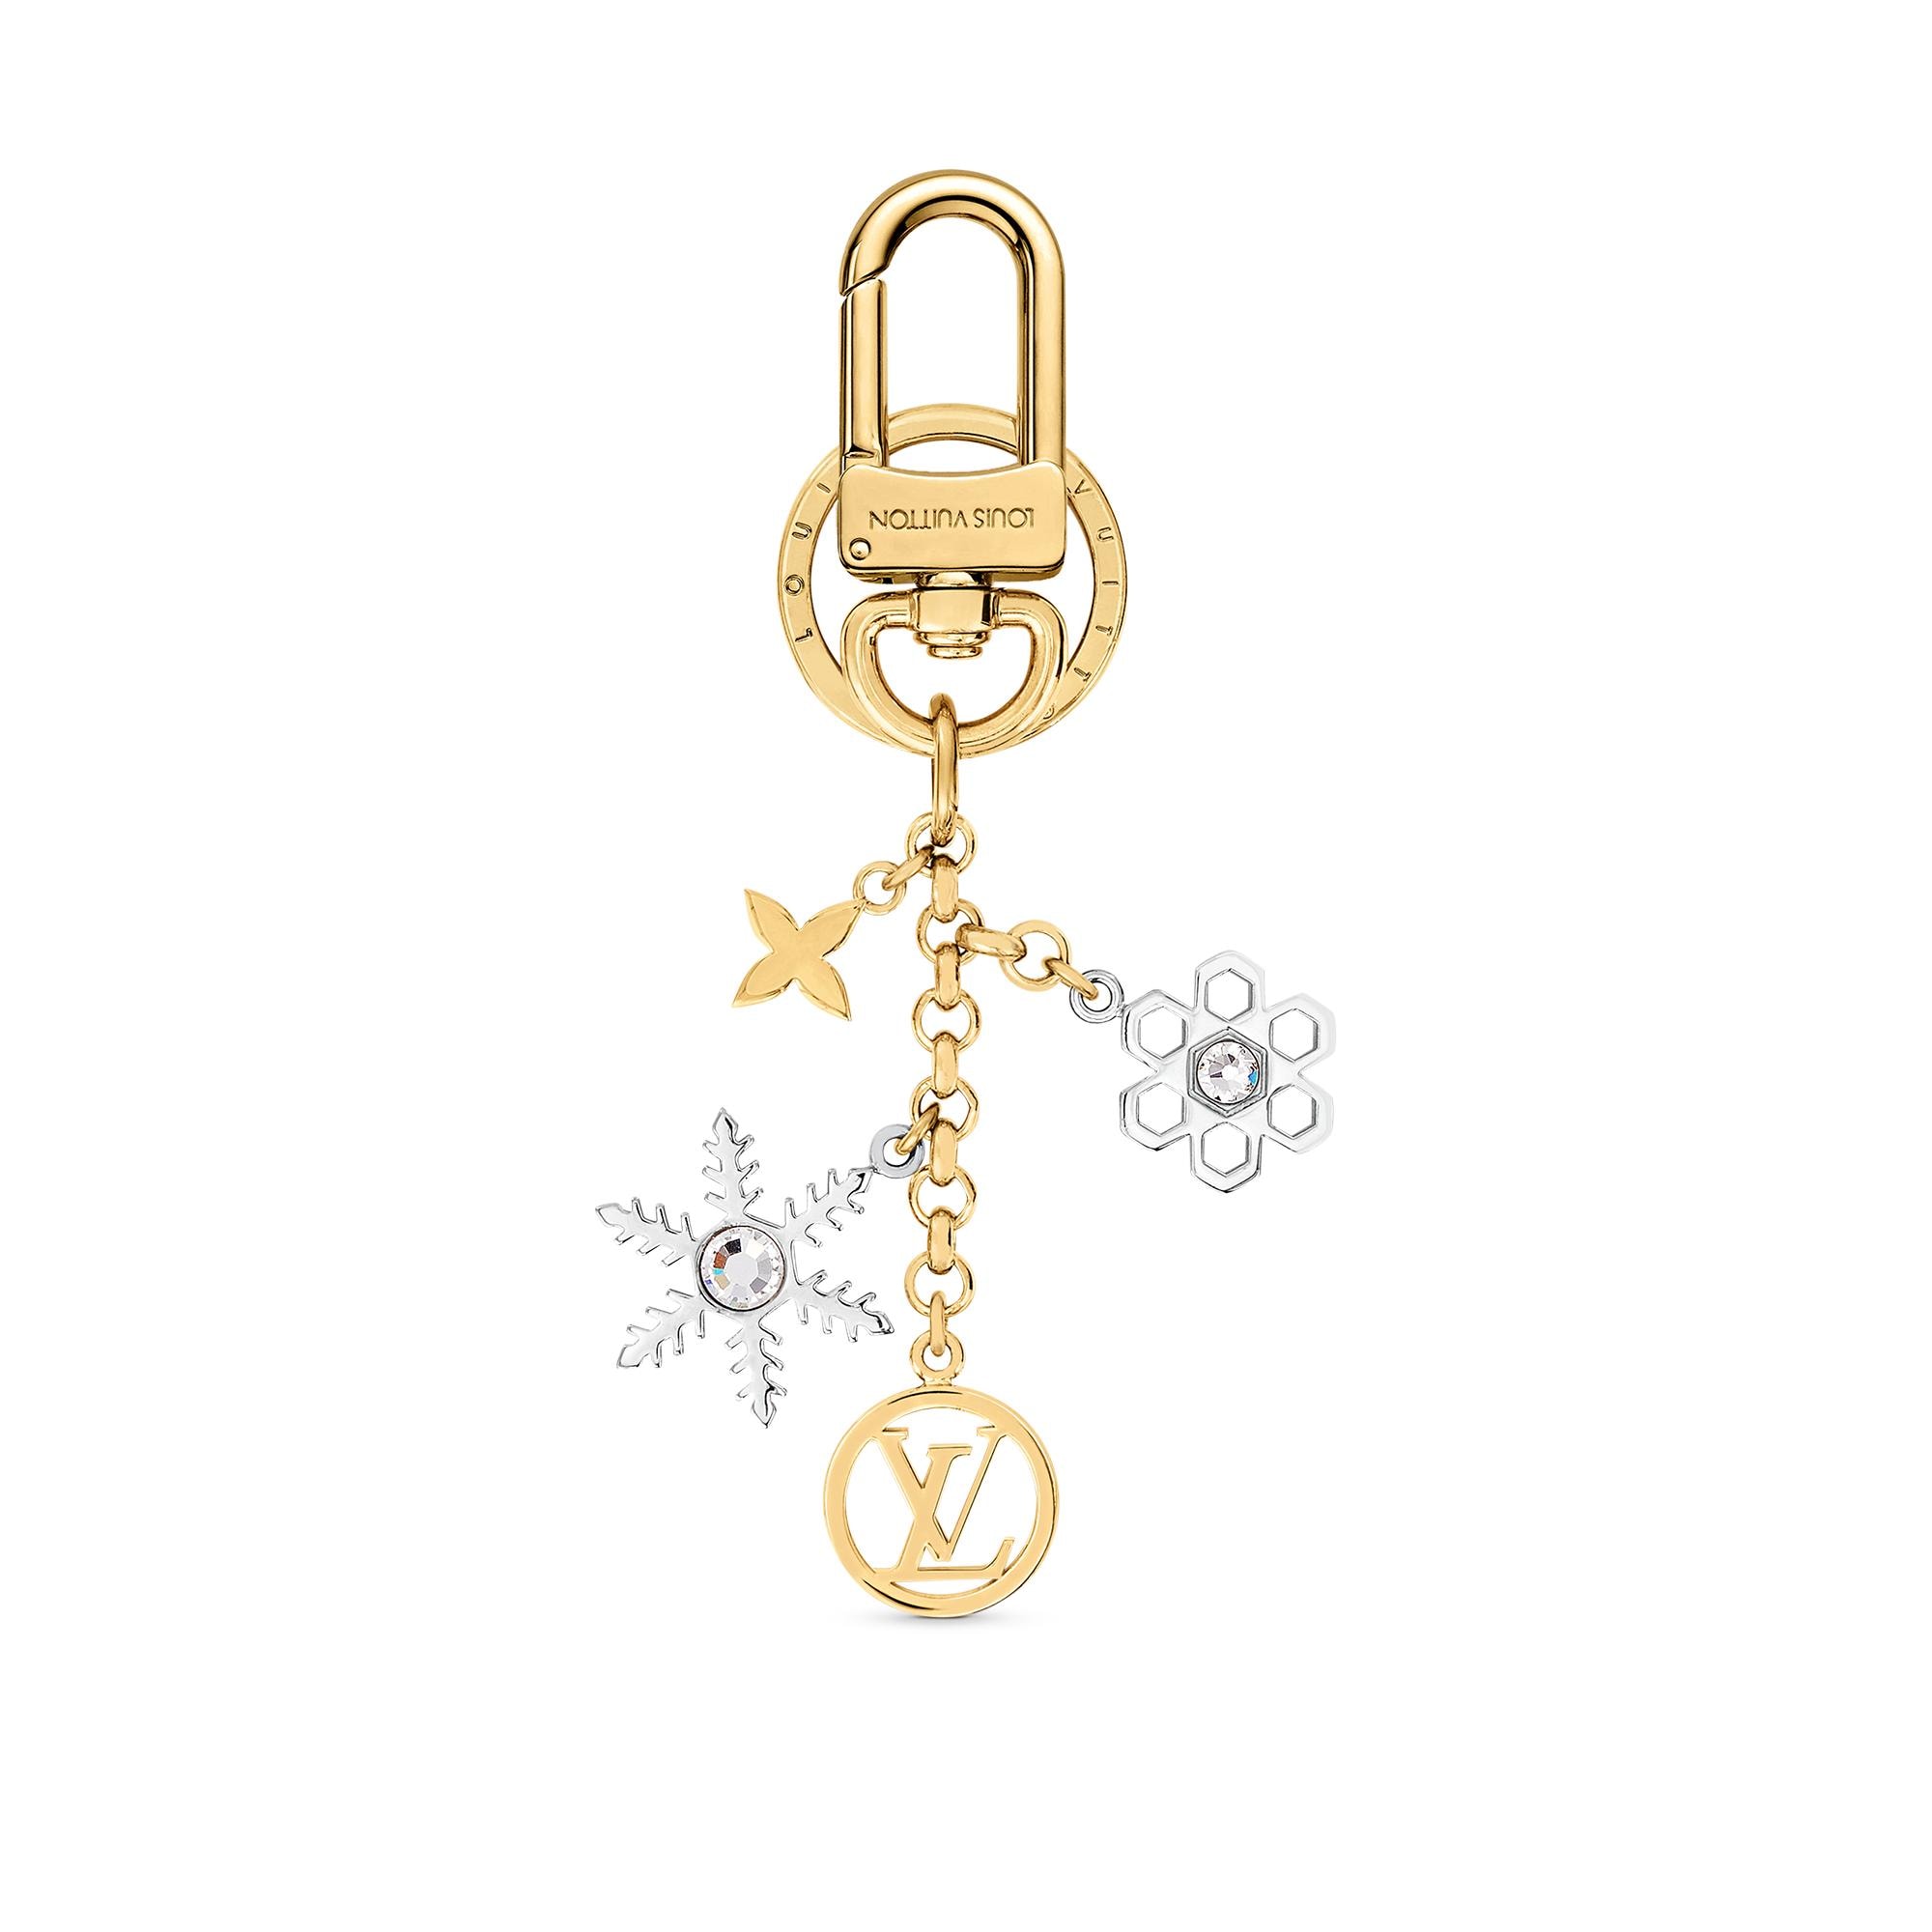 Shop Louis Vuitton Keychains & Bag Charms (M01374) by mariposaz